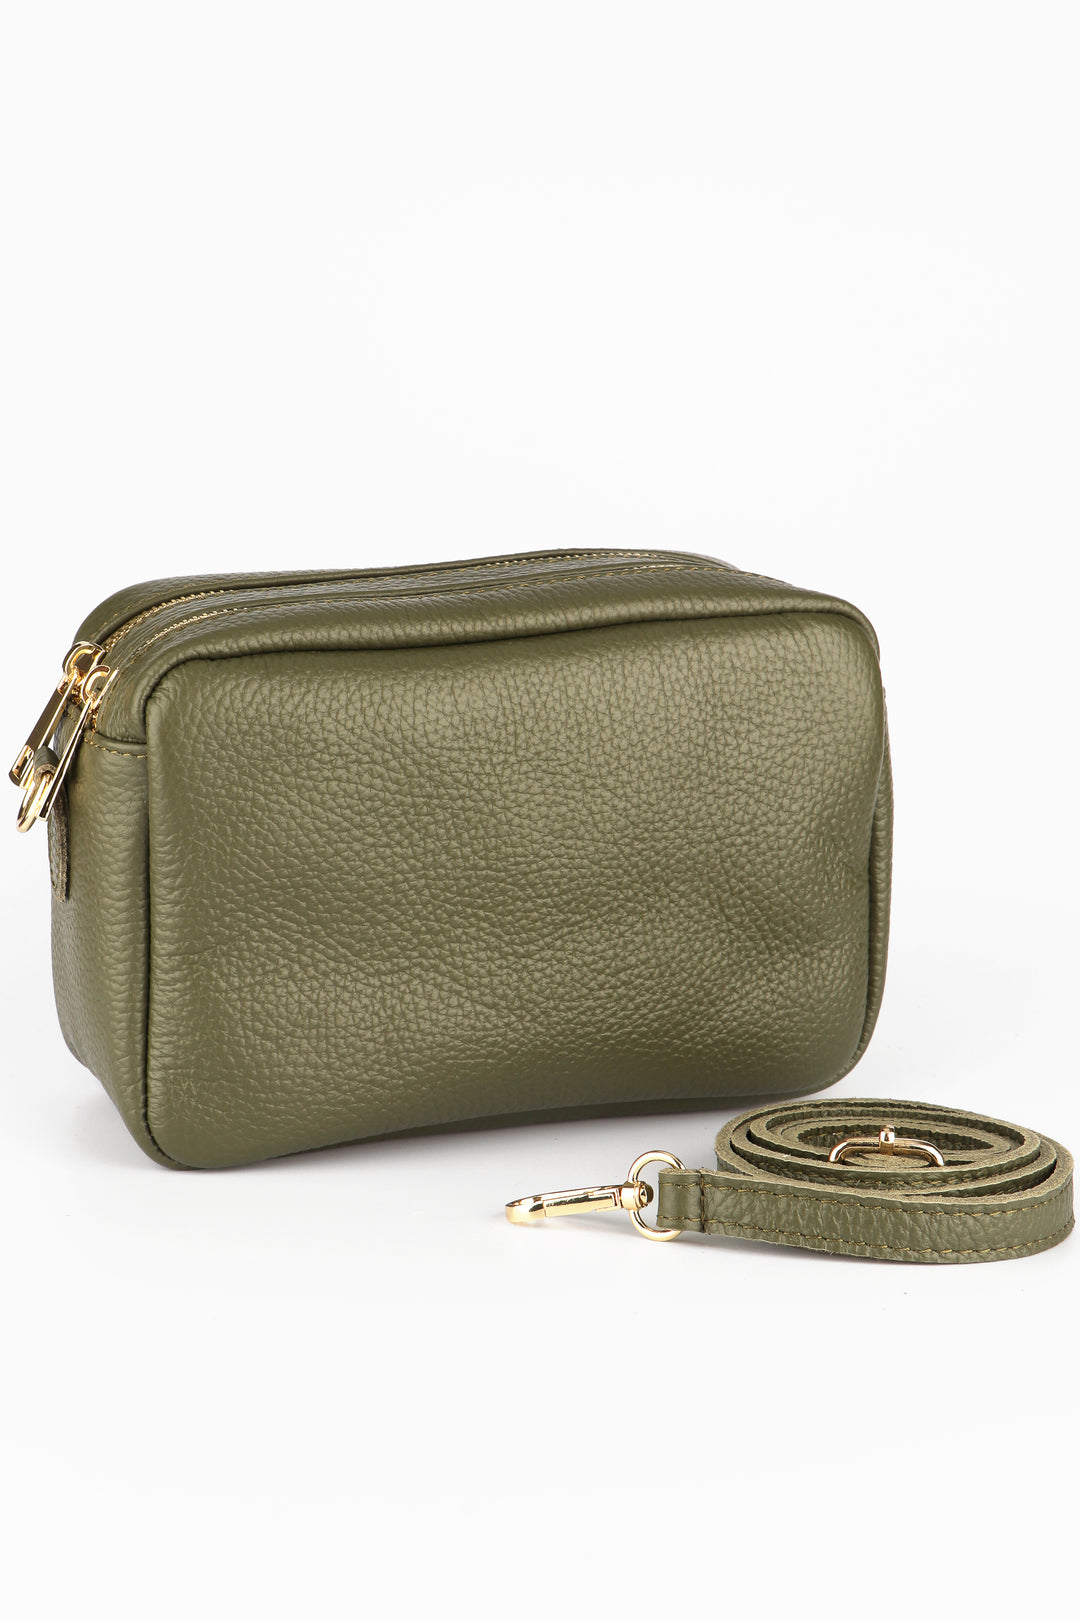 khaki green italian leather crossbody camera bag with detachable bag strap and gold hardware